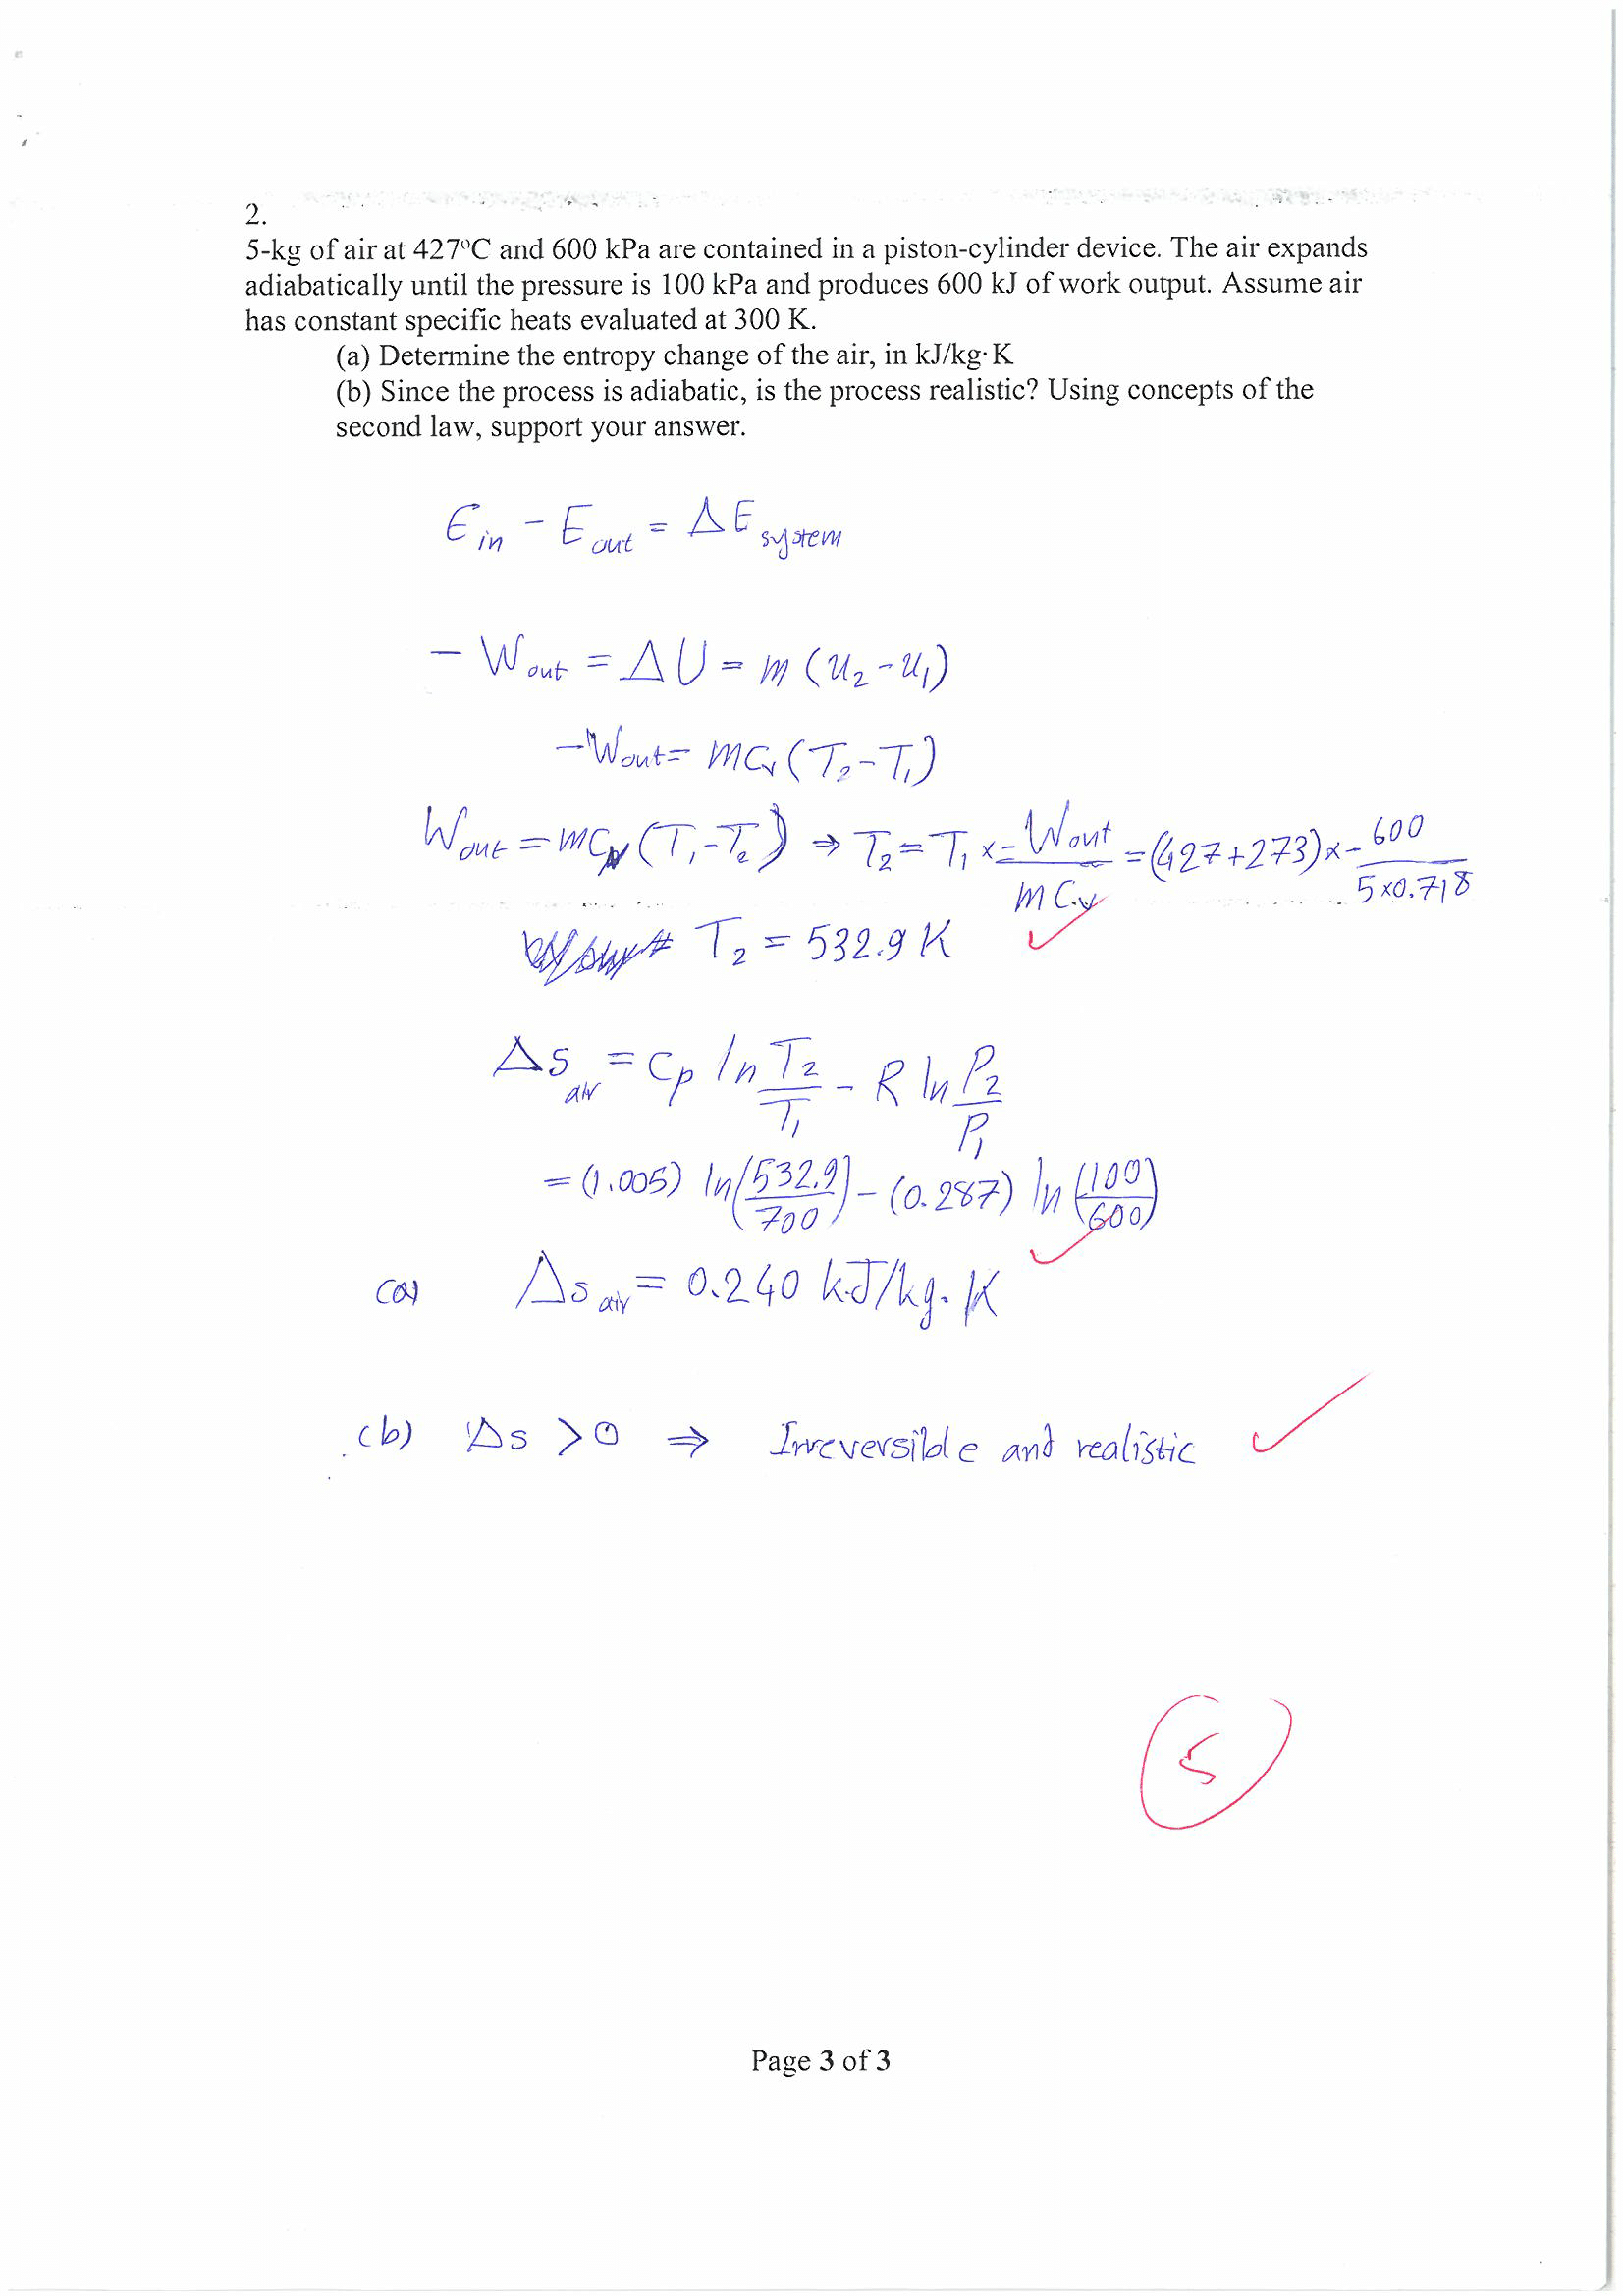 Homework 5 for Thermodynamics 2017